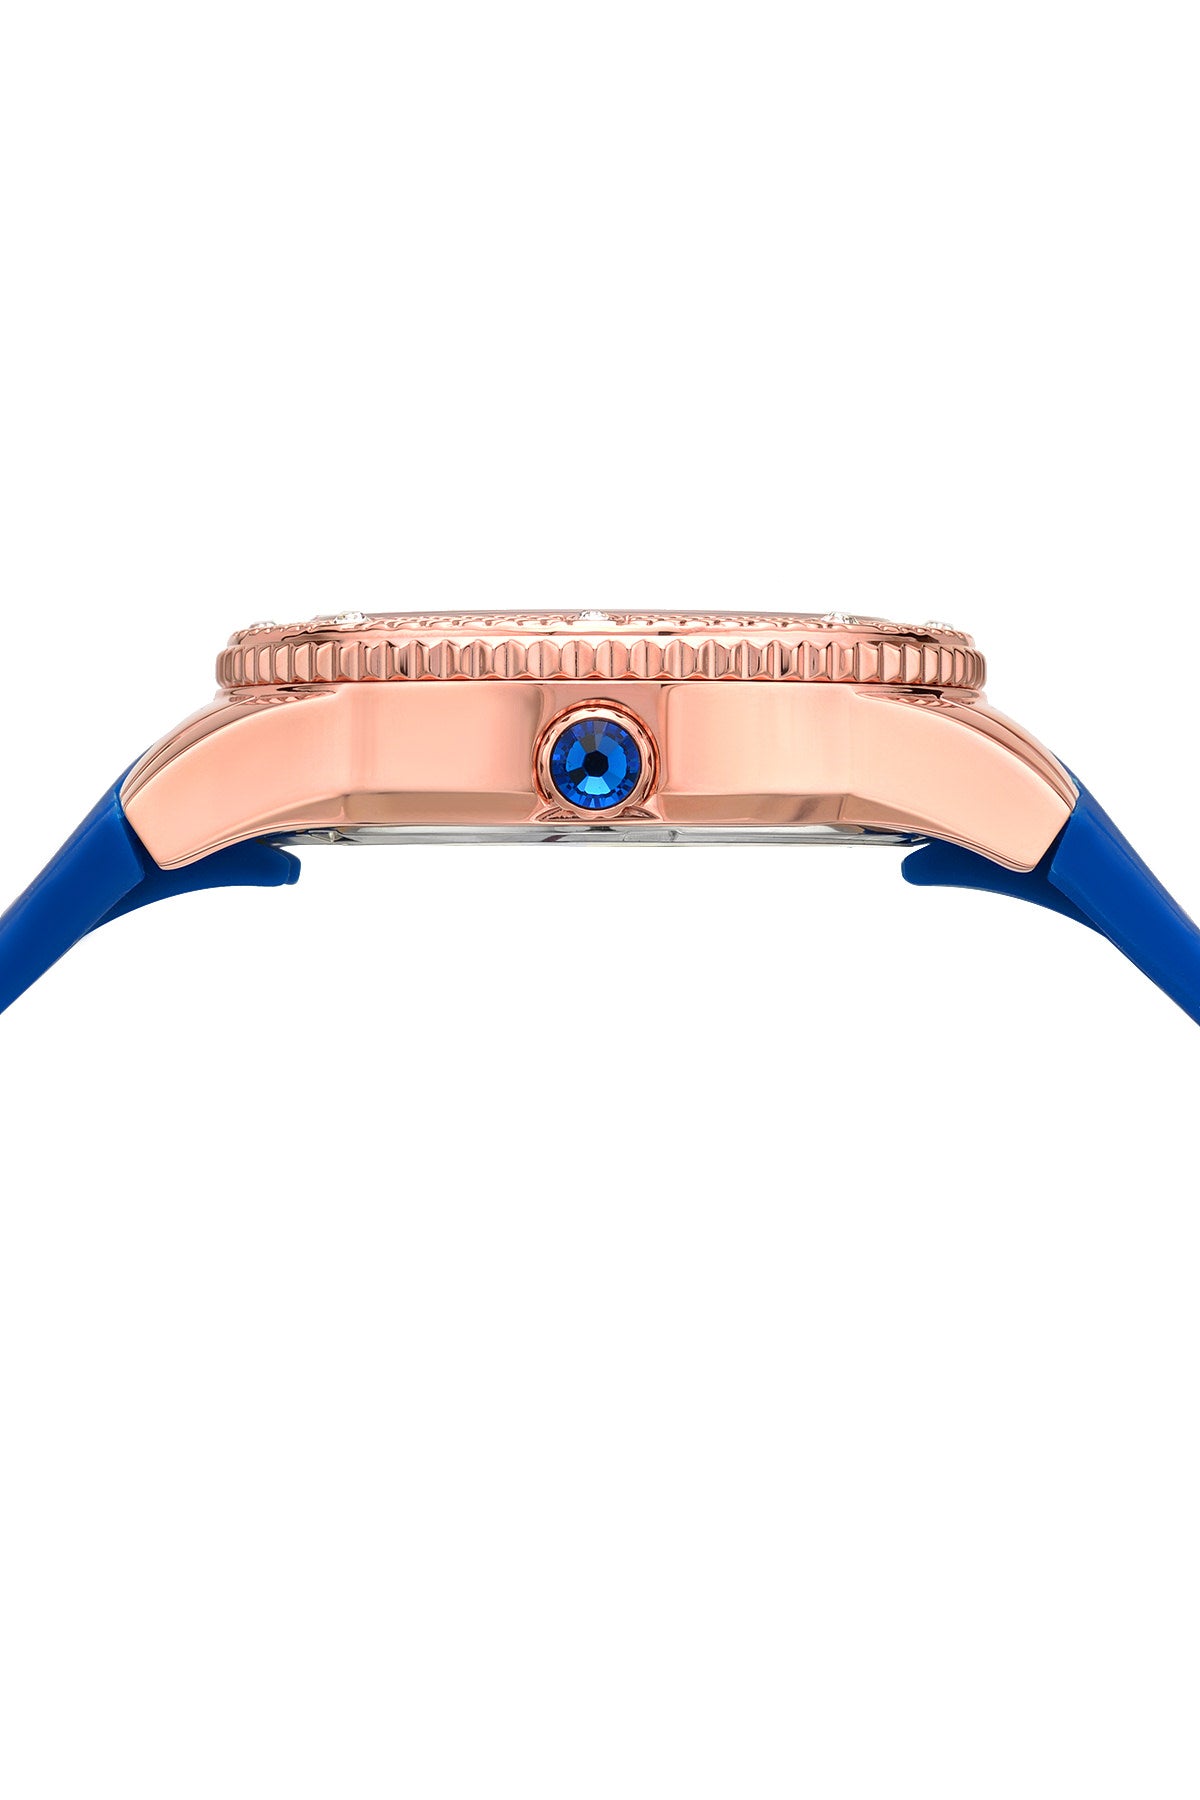 Porsamo Bleu Linda luxury women's watch, silicone strap, rose, blue 492CLIR